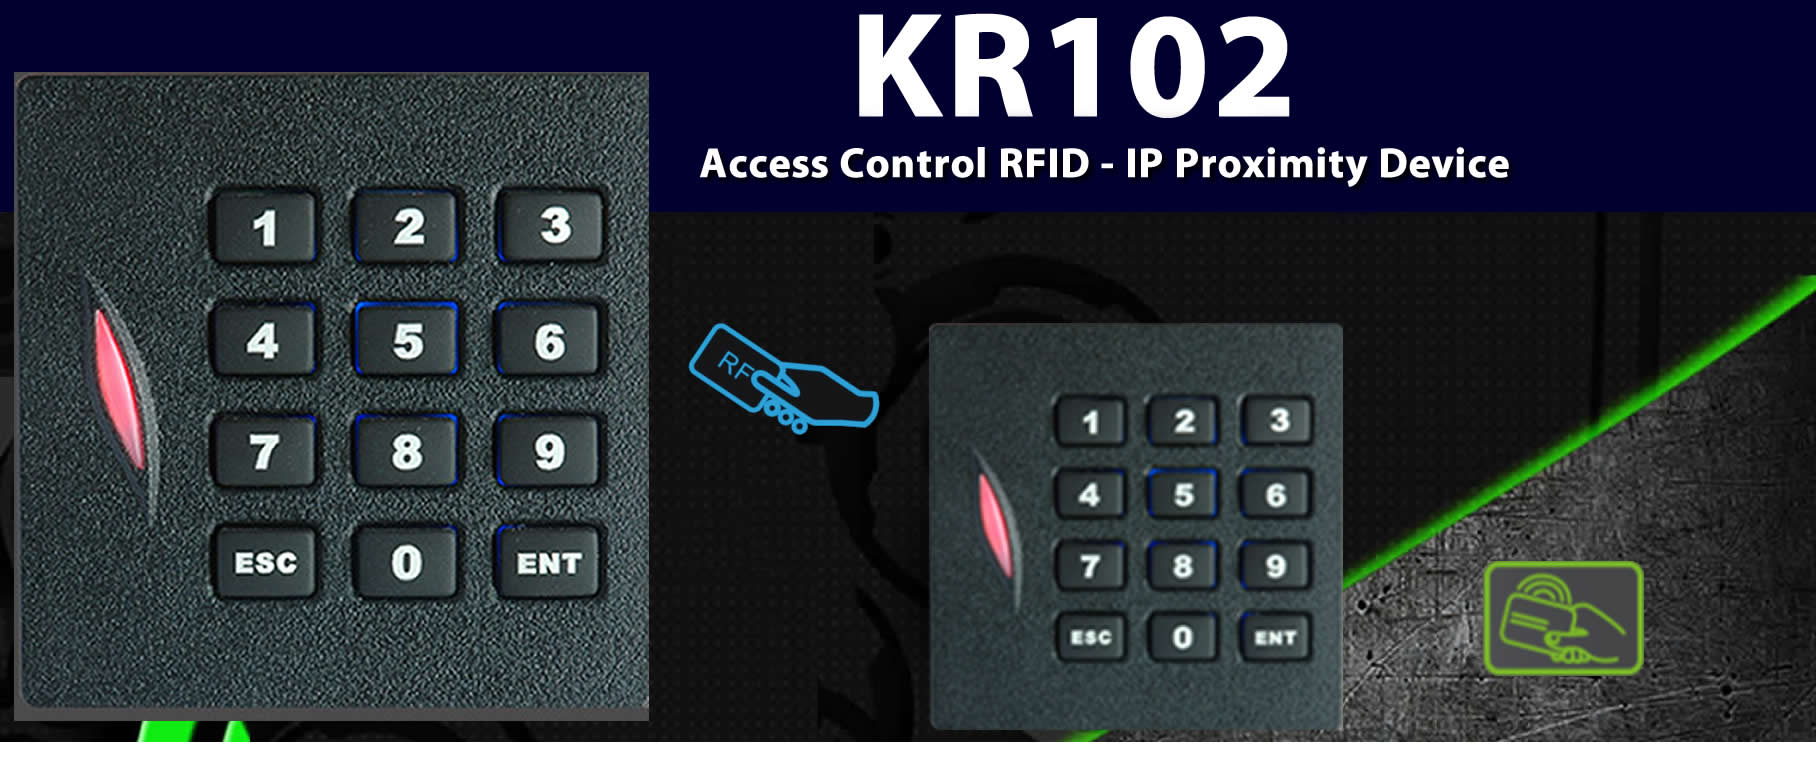 kr102 Access Control RFID - IP Proximity Device